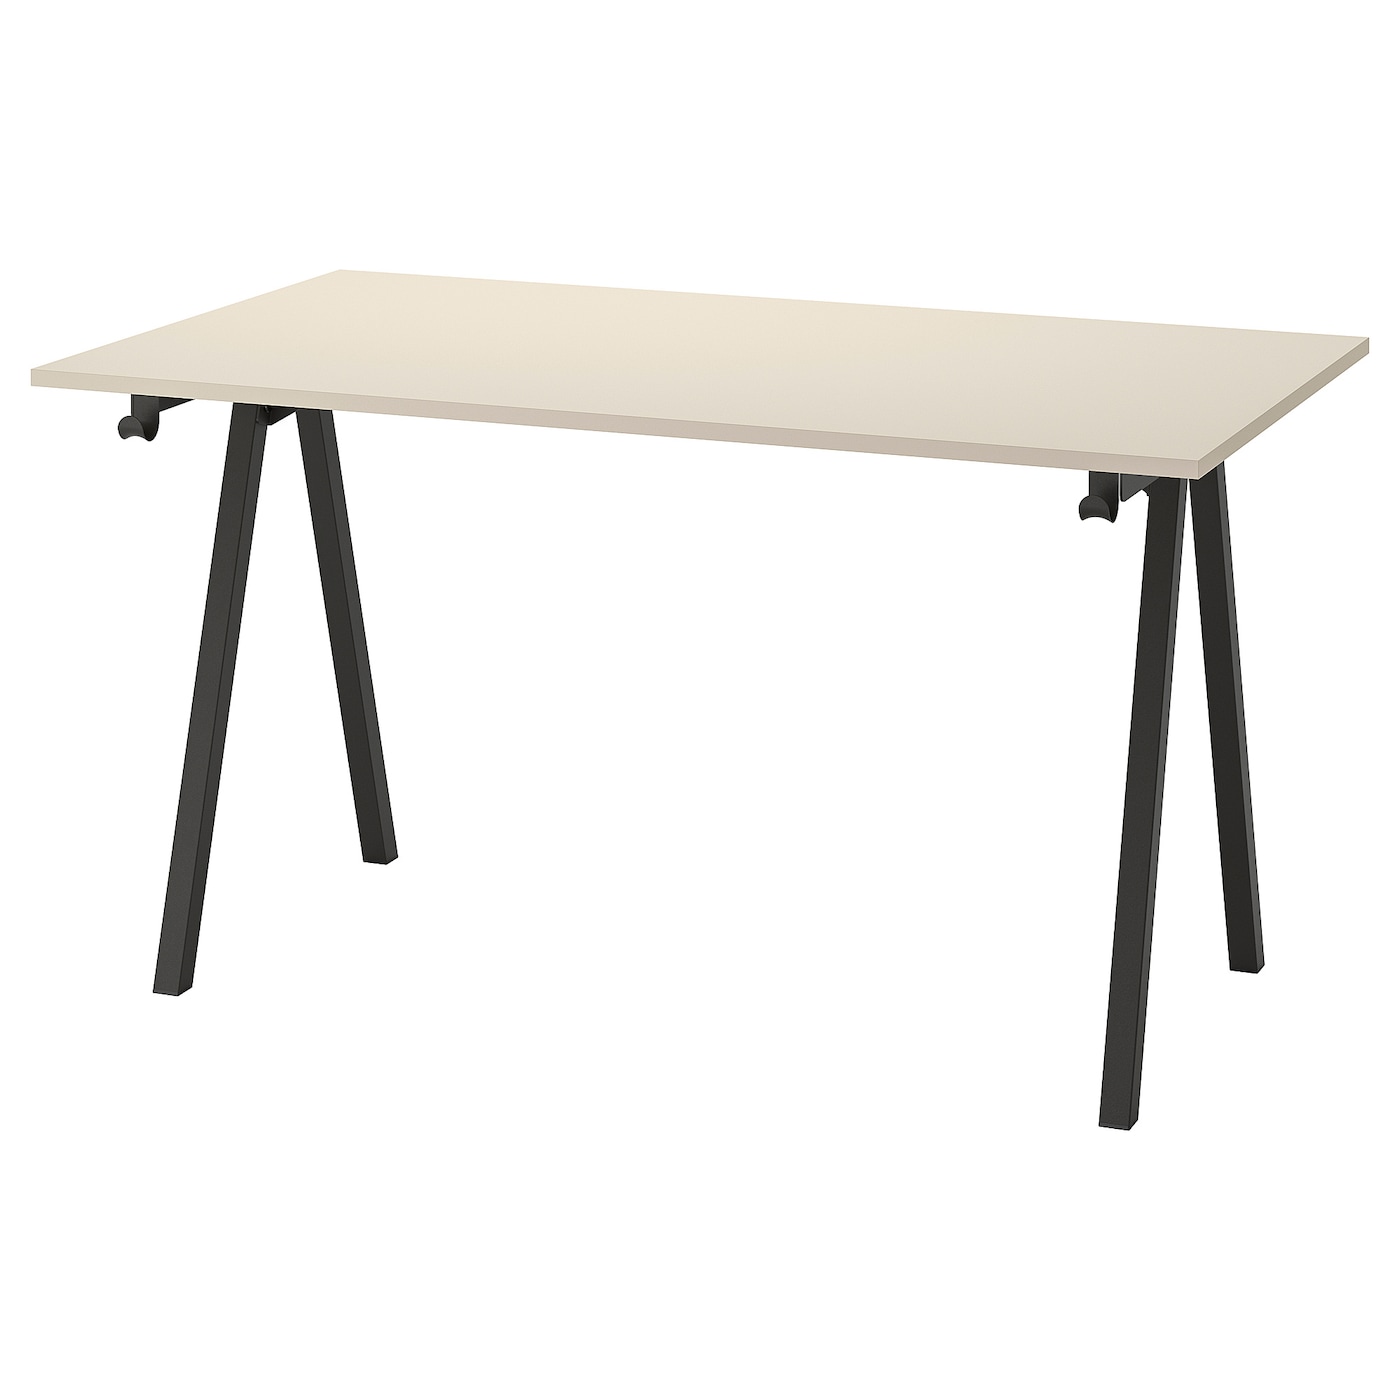 Письменный стол - IKEA TROTTEN, 140х80 см, бежевый/антрацит, ТРОТТЕН ИКЕА